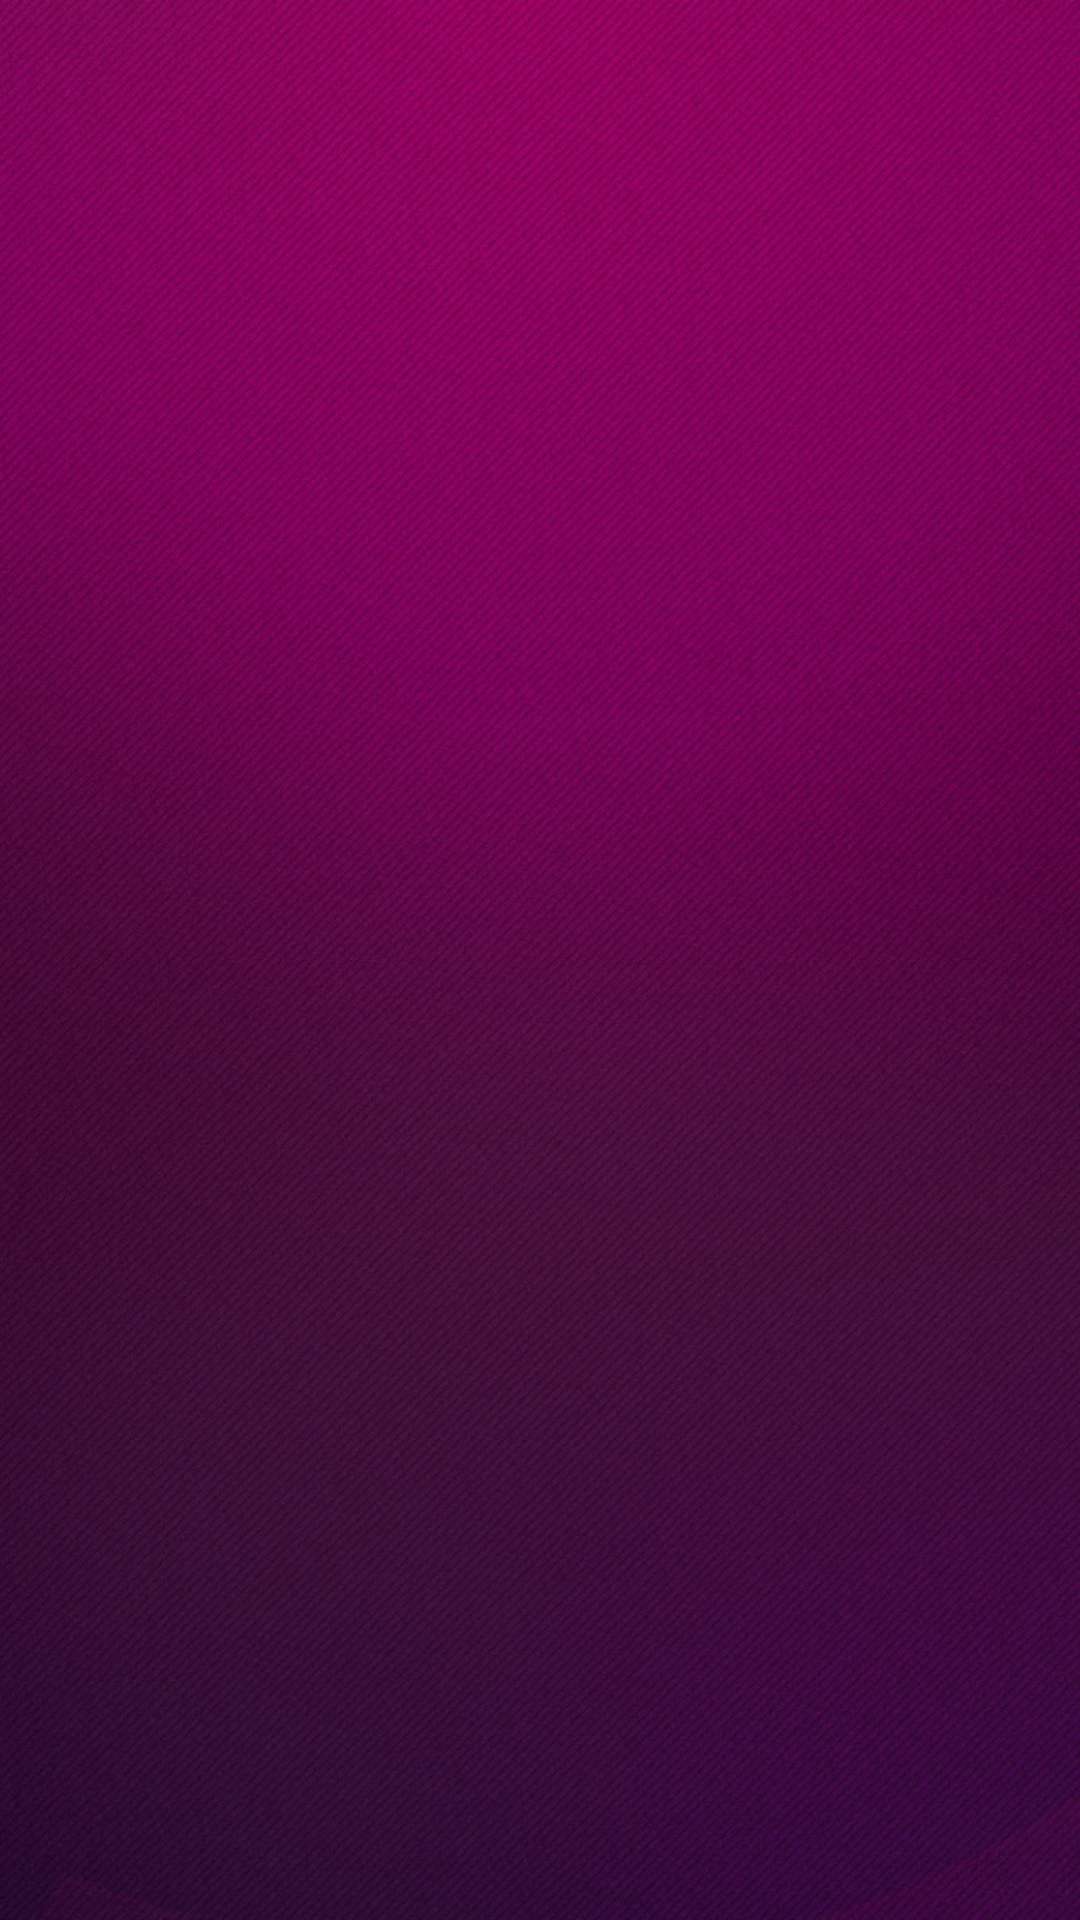 Plain Purple wallpaper 1080x1920